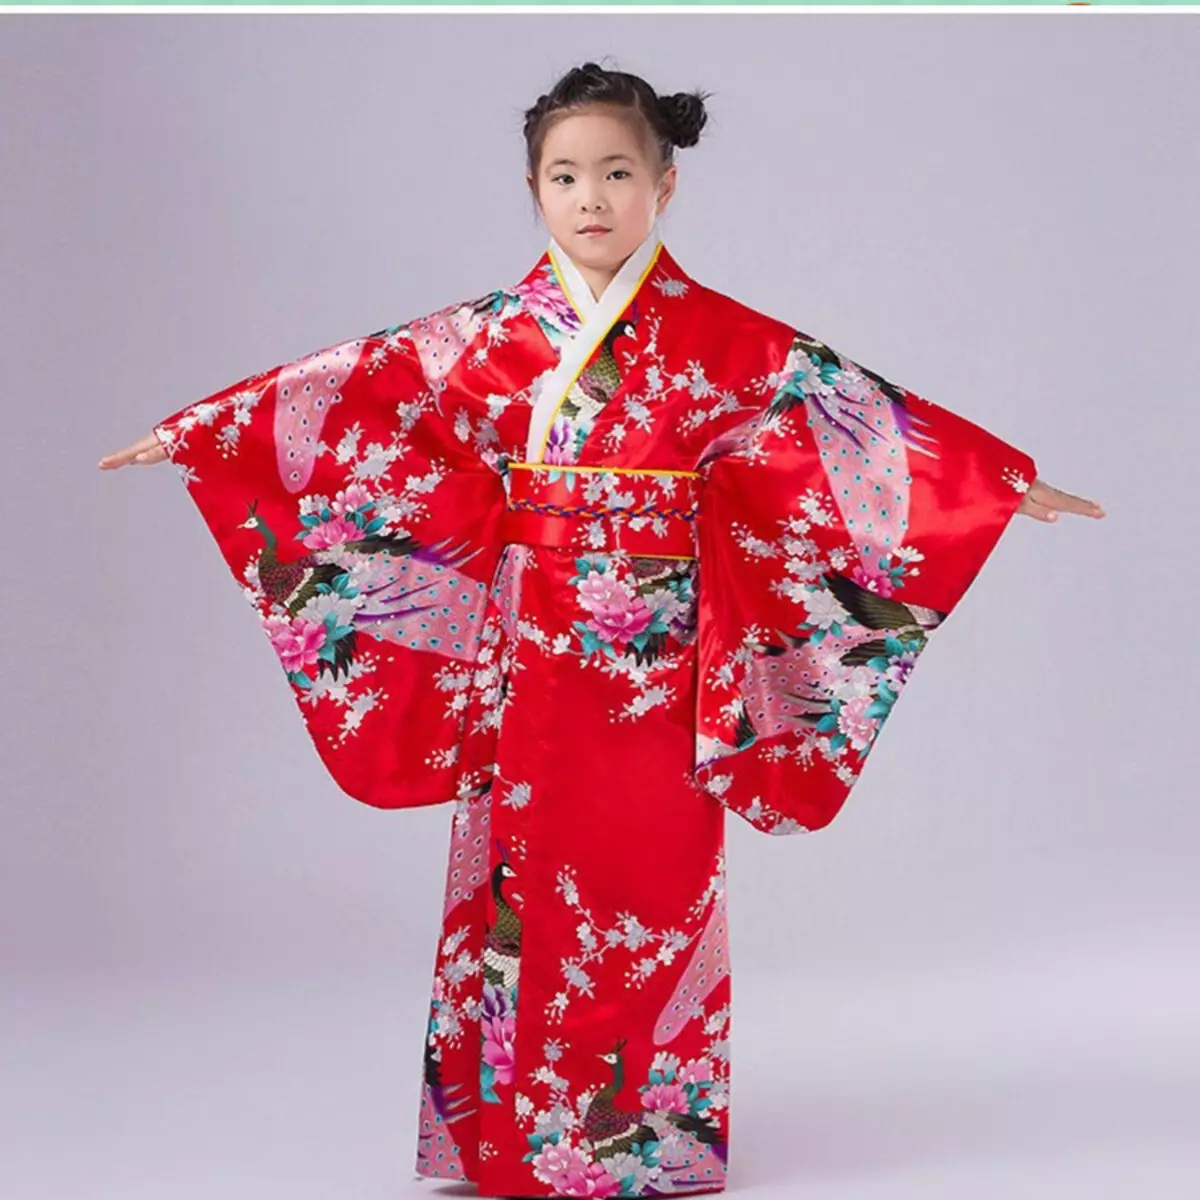 Traxe xaponés (61 fotos): Feminino National Outfit Japan, Schoolgirl Girl 1381_6